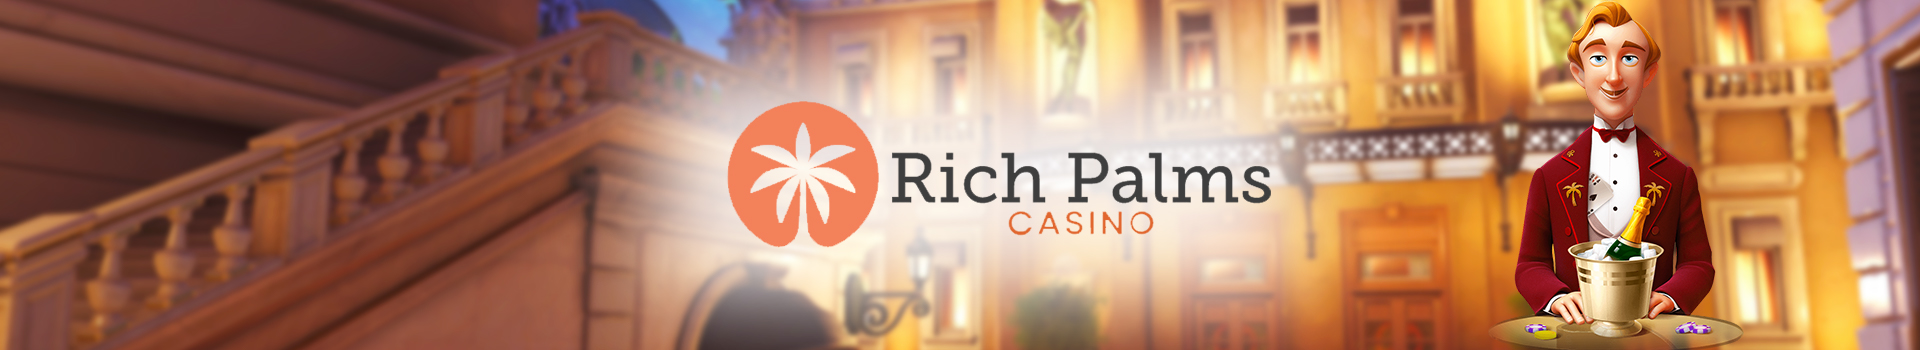 Casino rich palms casino